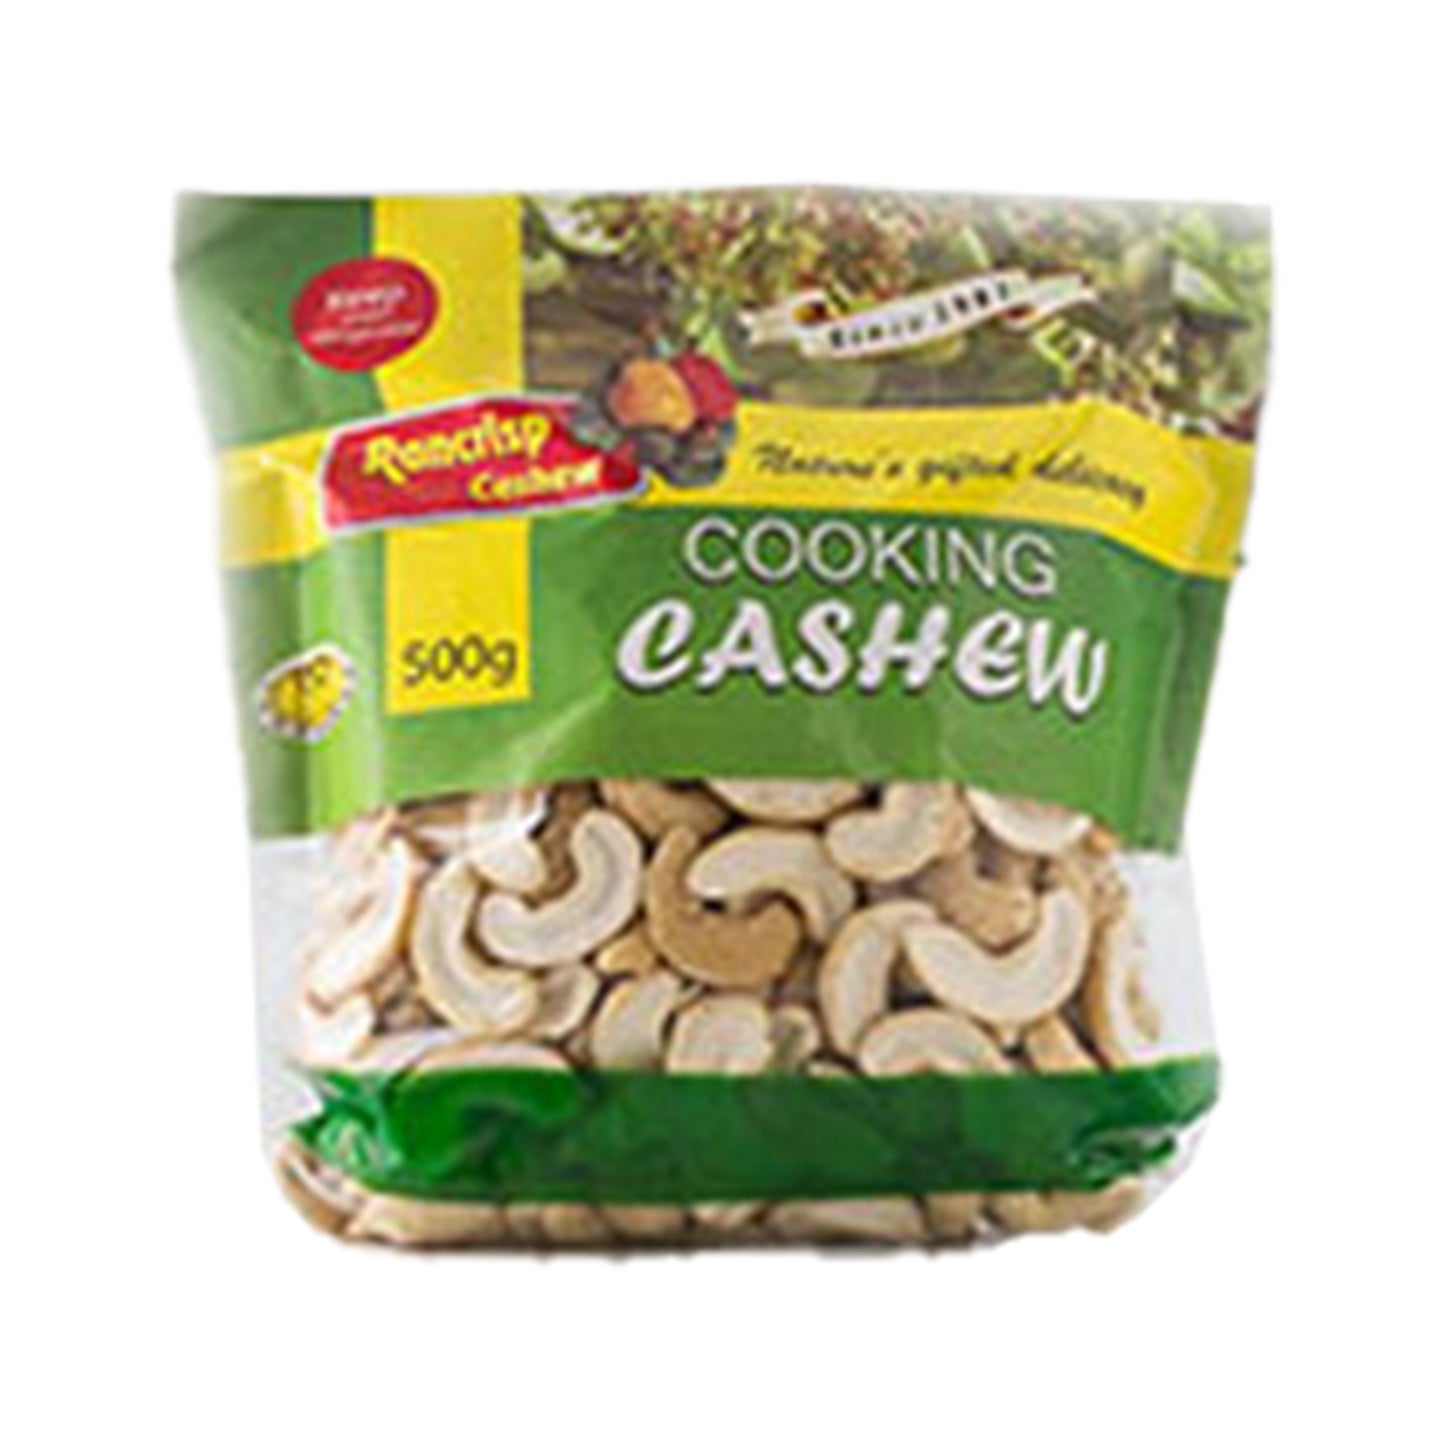 Rancrisp Cooking Cashew (500g)